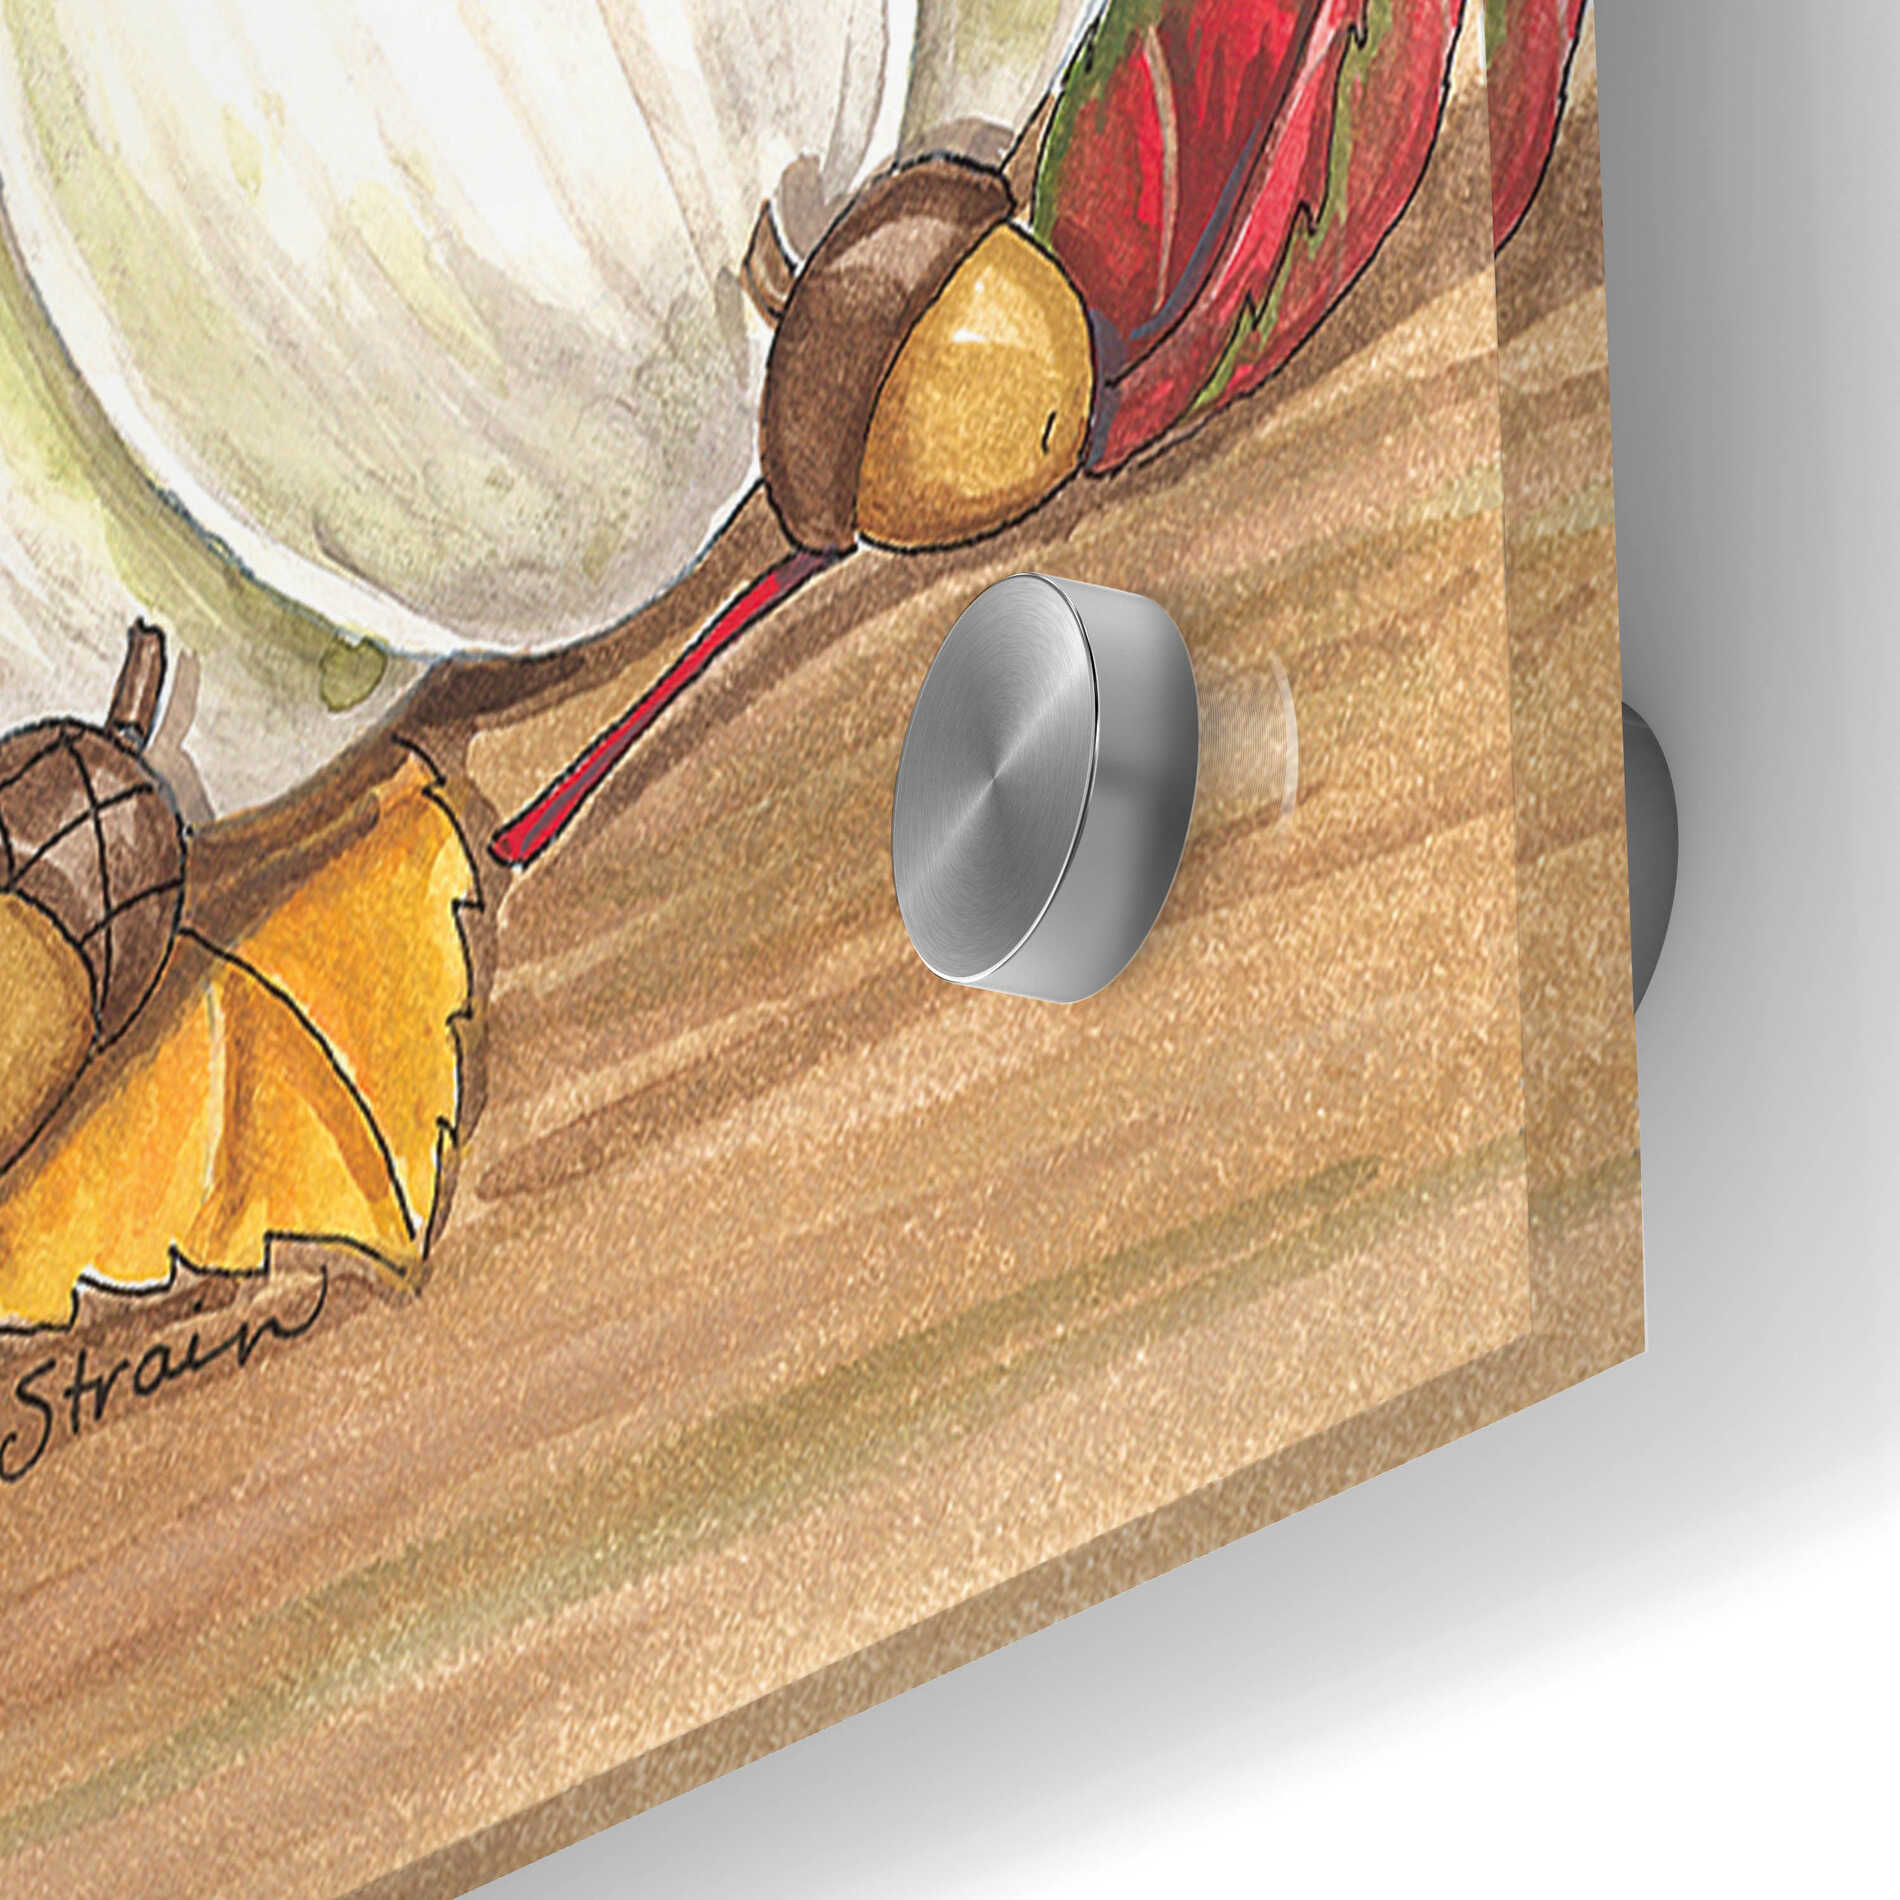 Epic Art 'Pumpkin Patch Owl' by Deb Strain, Acrylic Glass Wall Art,24x36